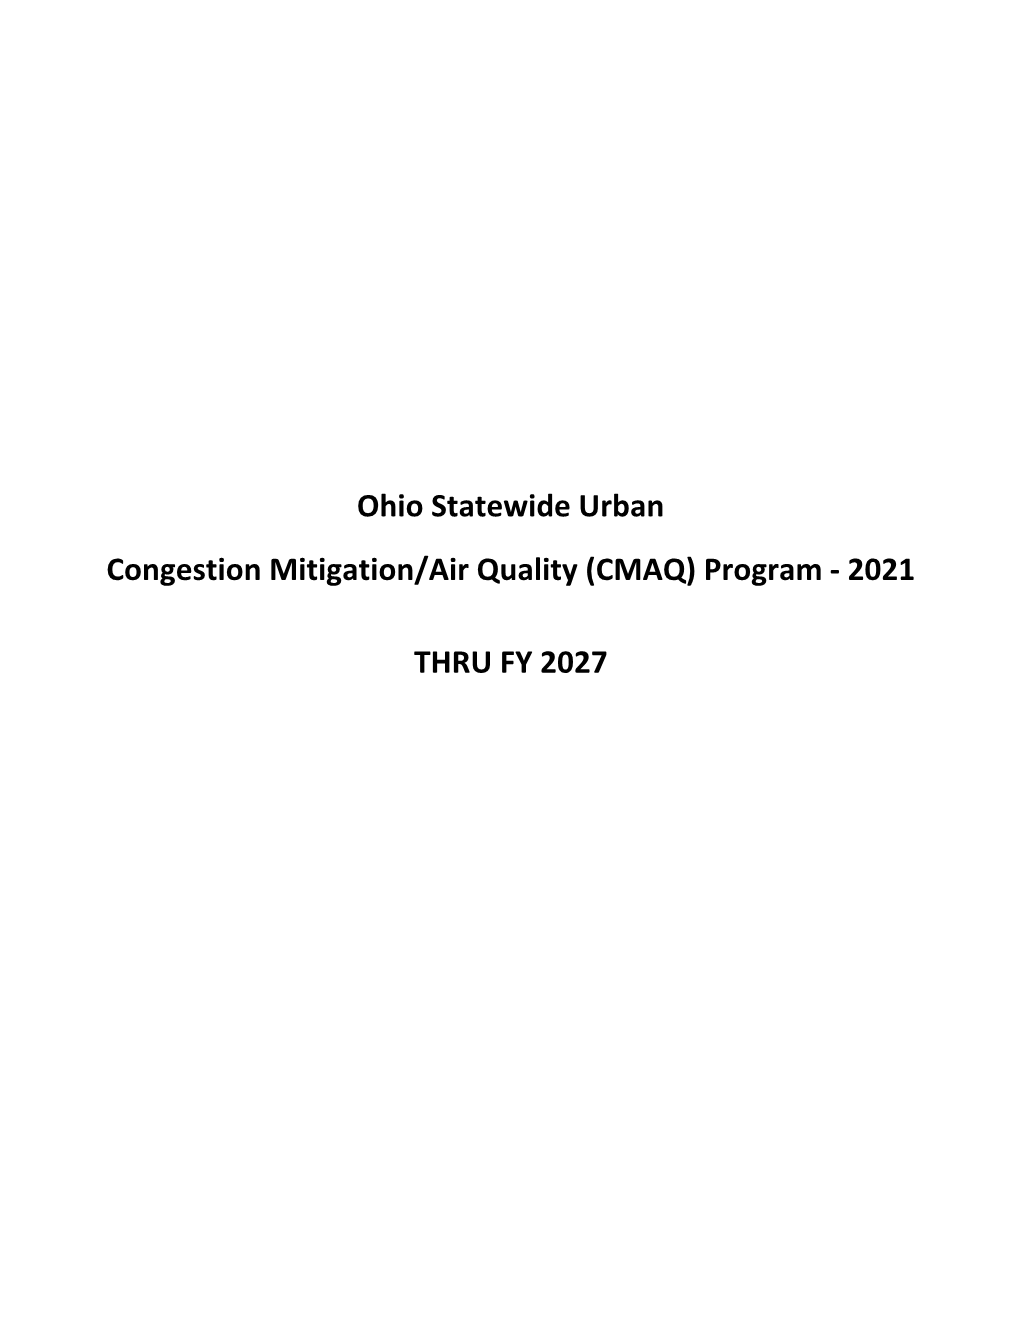 Ohio Statewide Urban Congestion Mitigation/Air Quality (CMAQ) Program – Page 1 PREFACE